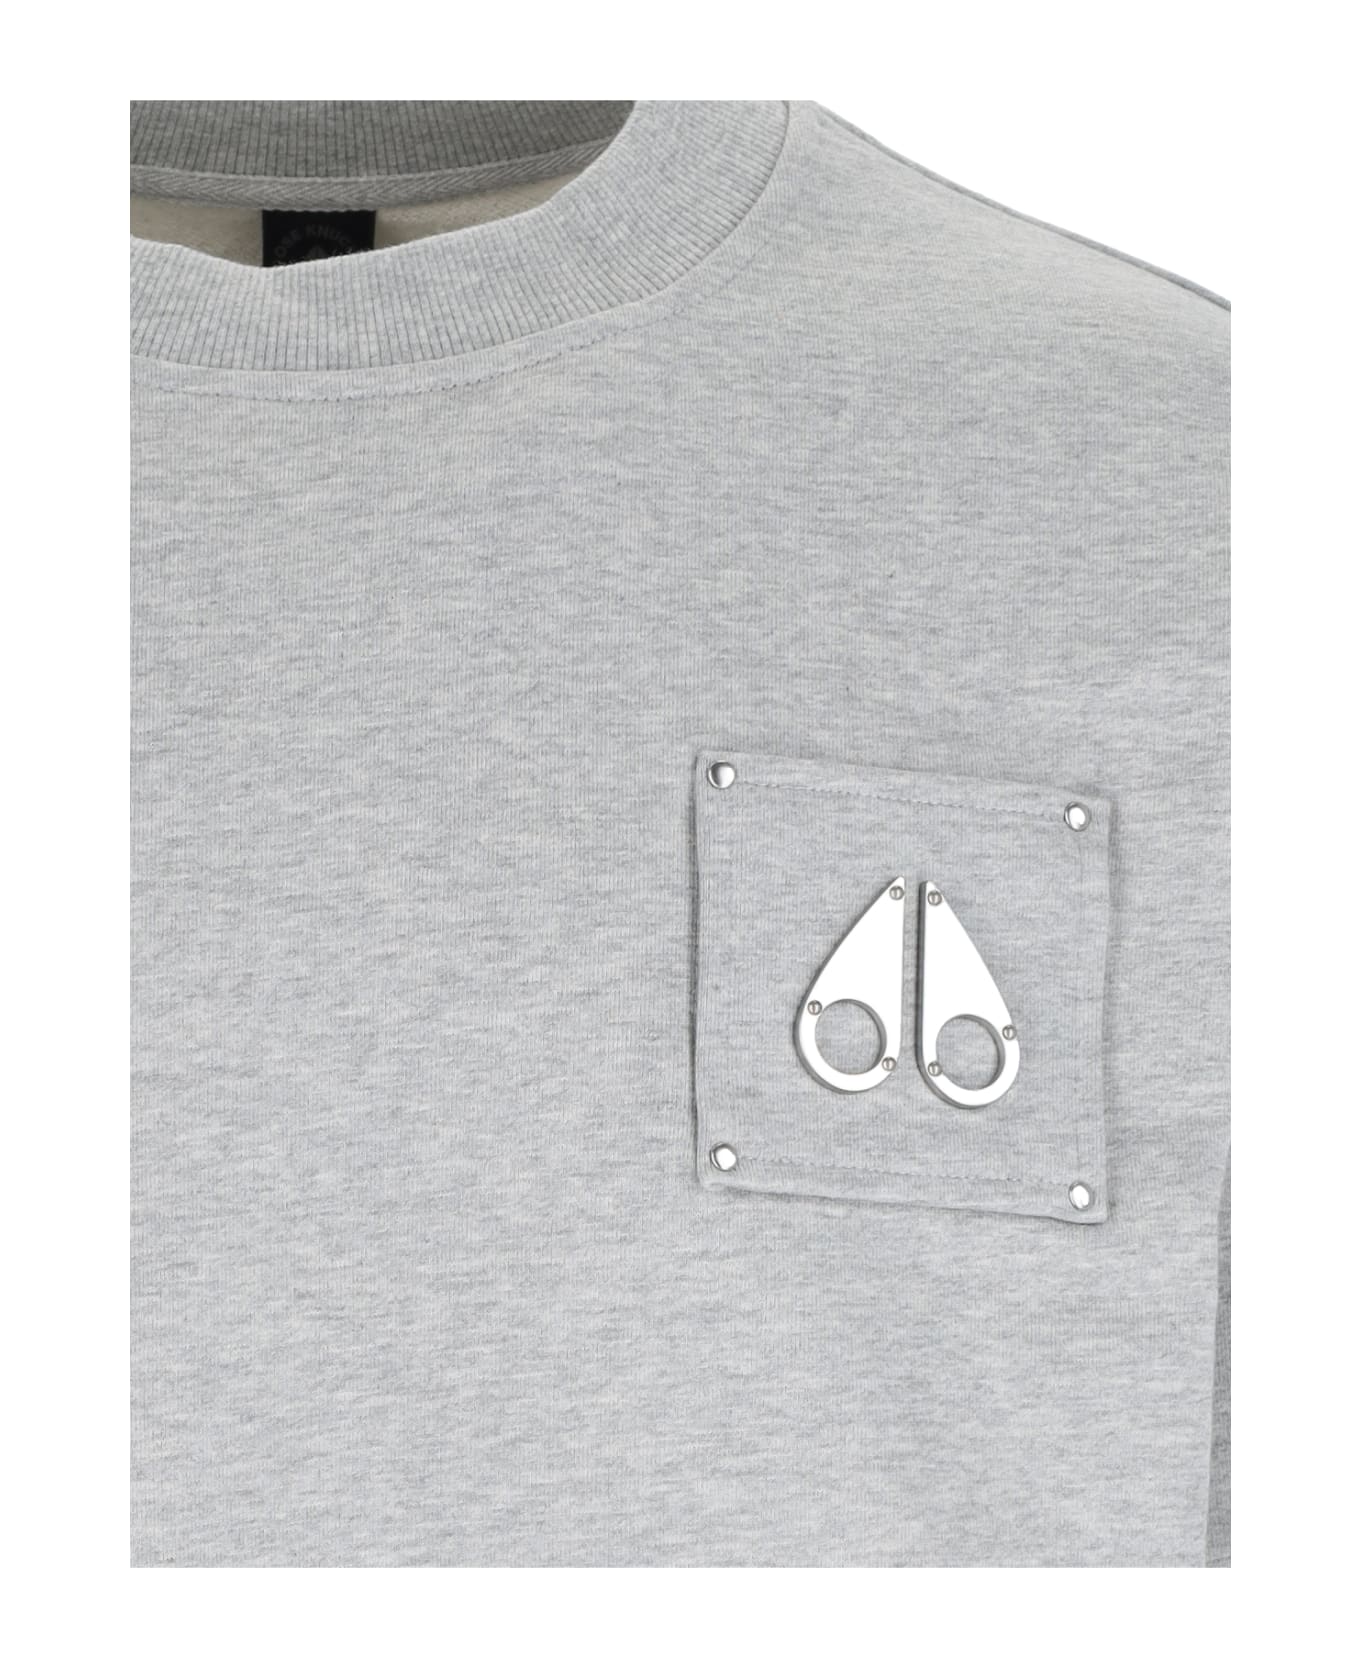 Moose Knuckles Logo Crew Neck Sweatshirt - Gray